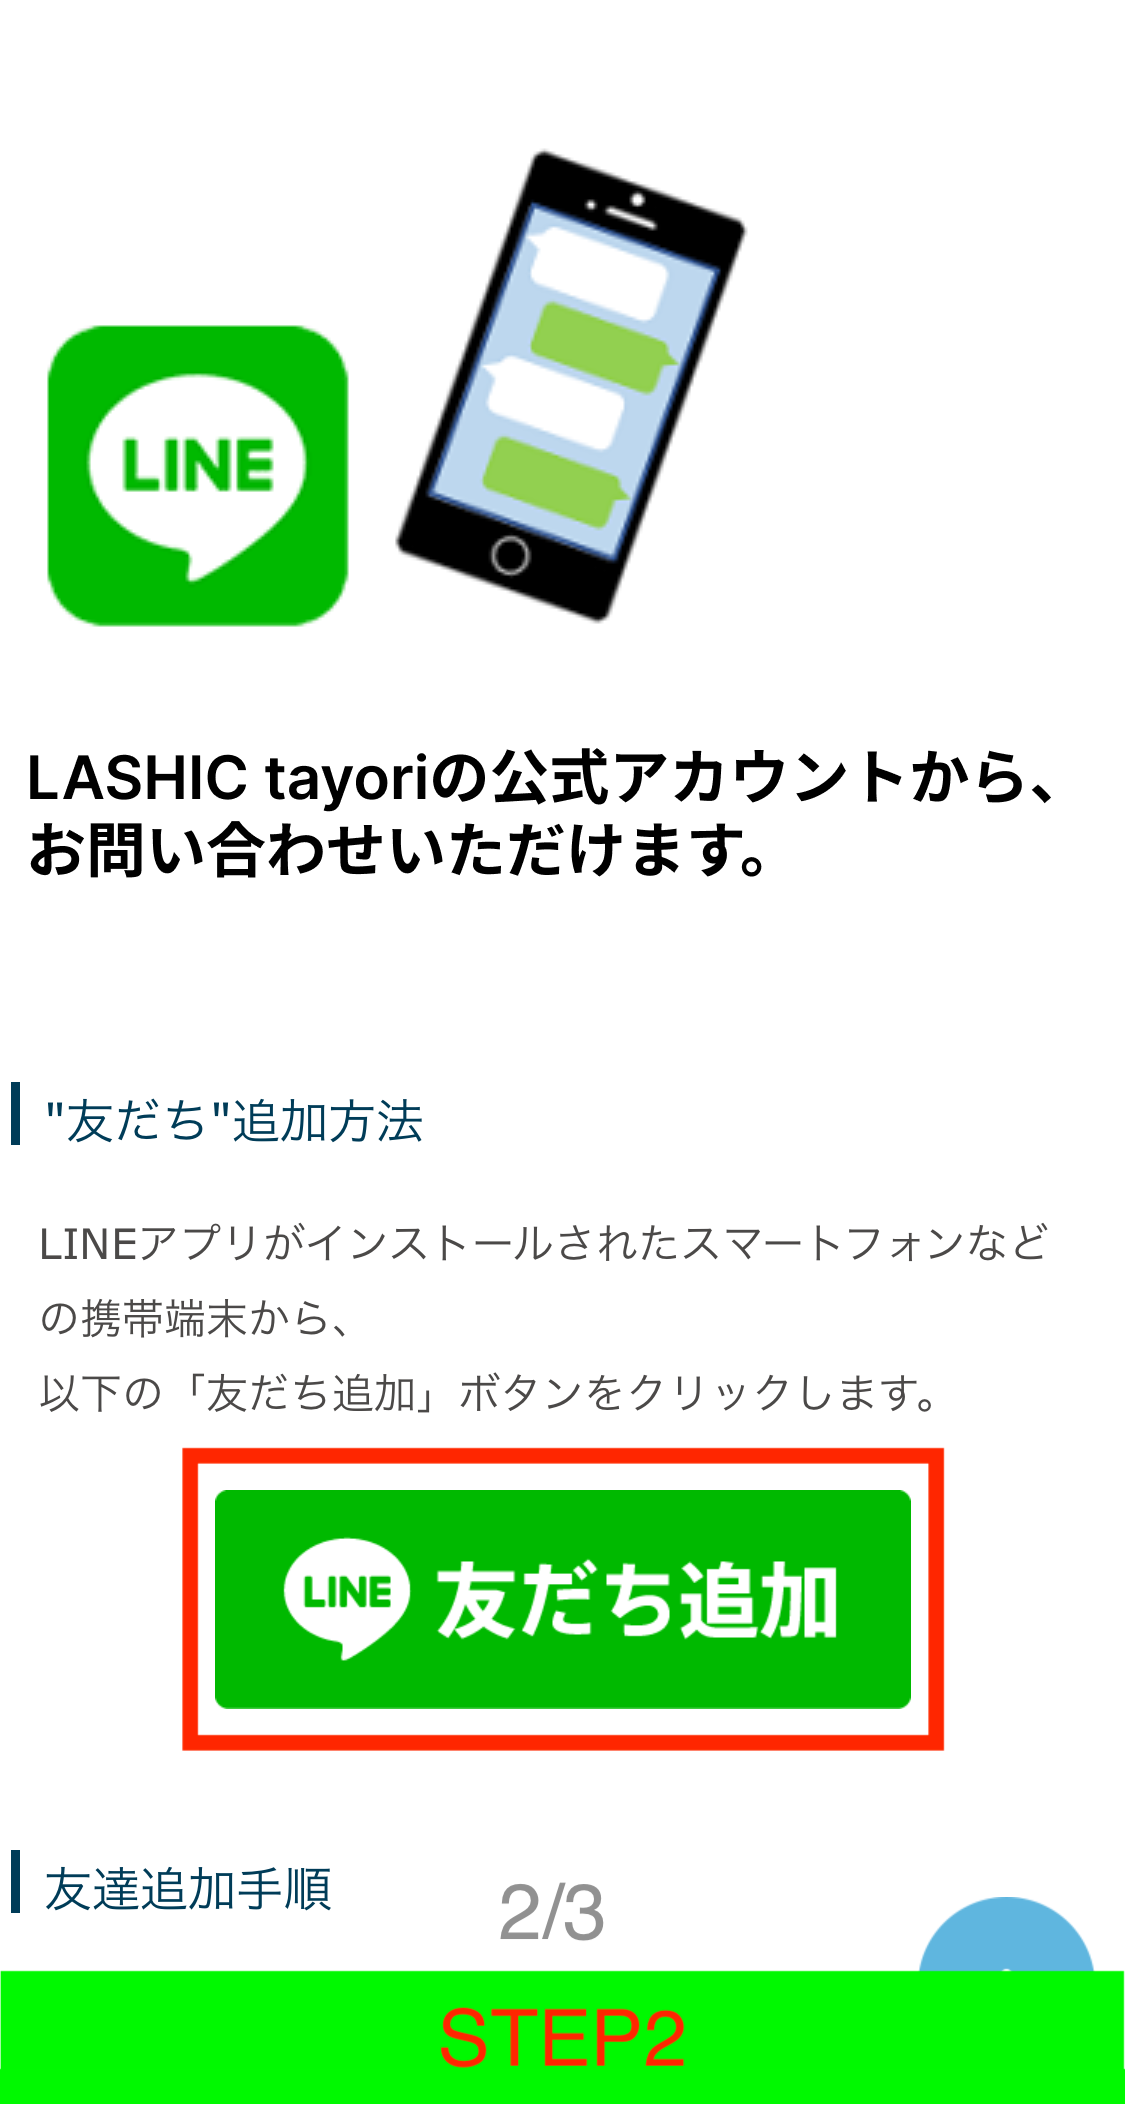 LASHIC tayori LINEの友達追加 イメージ2